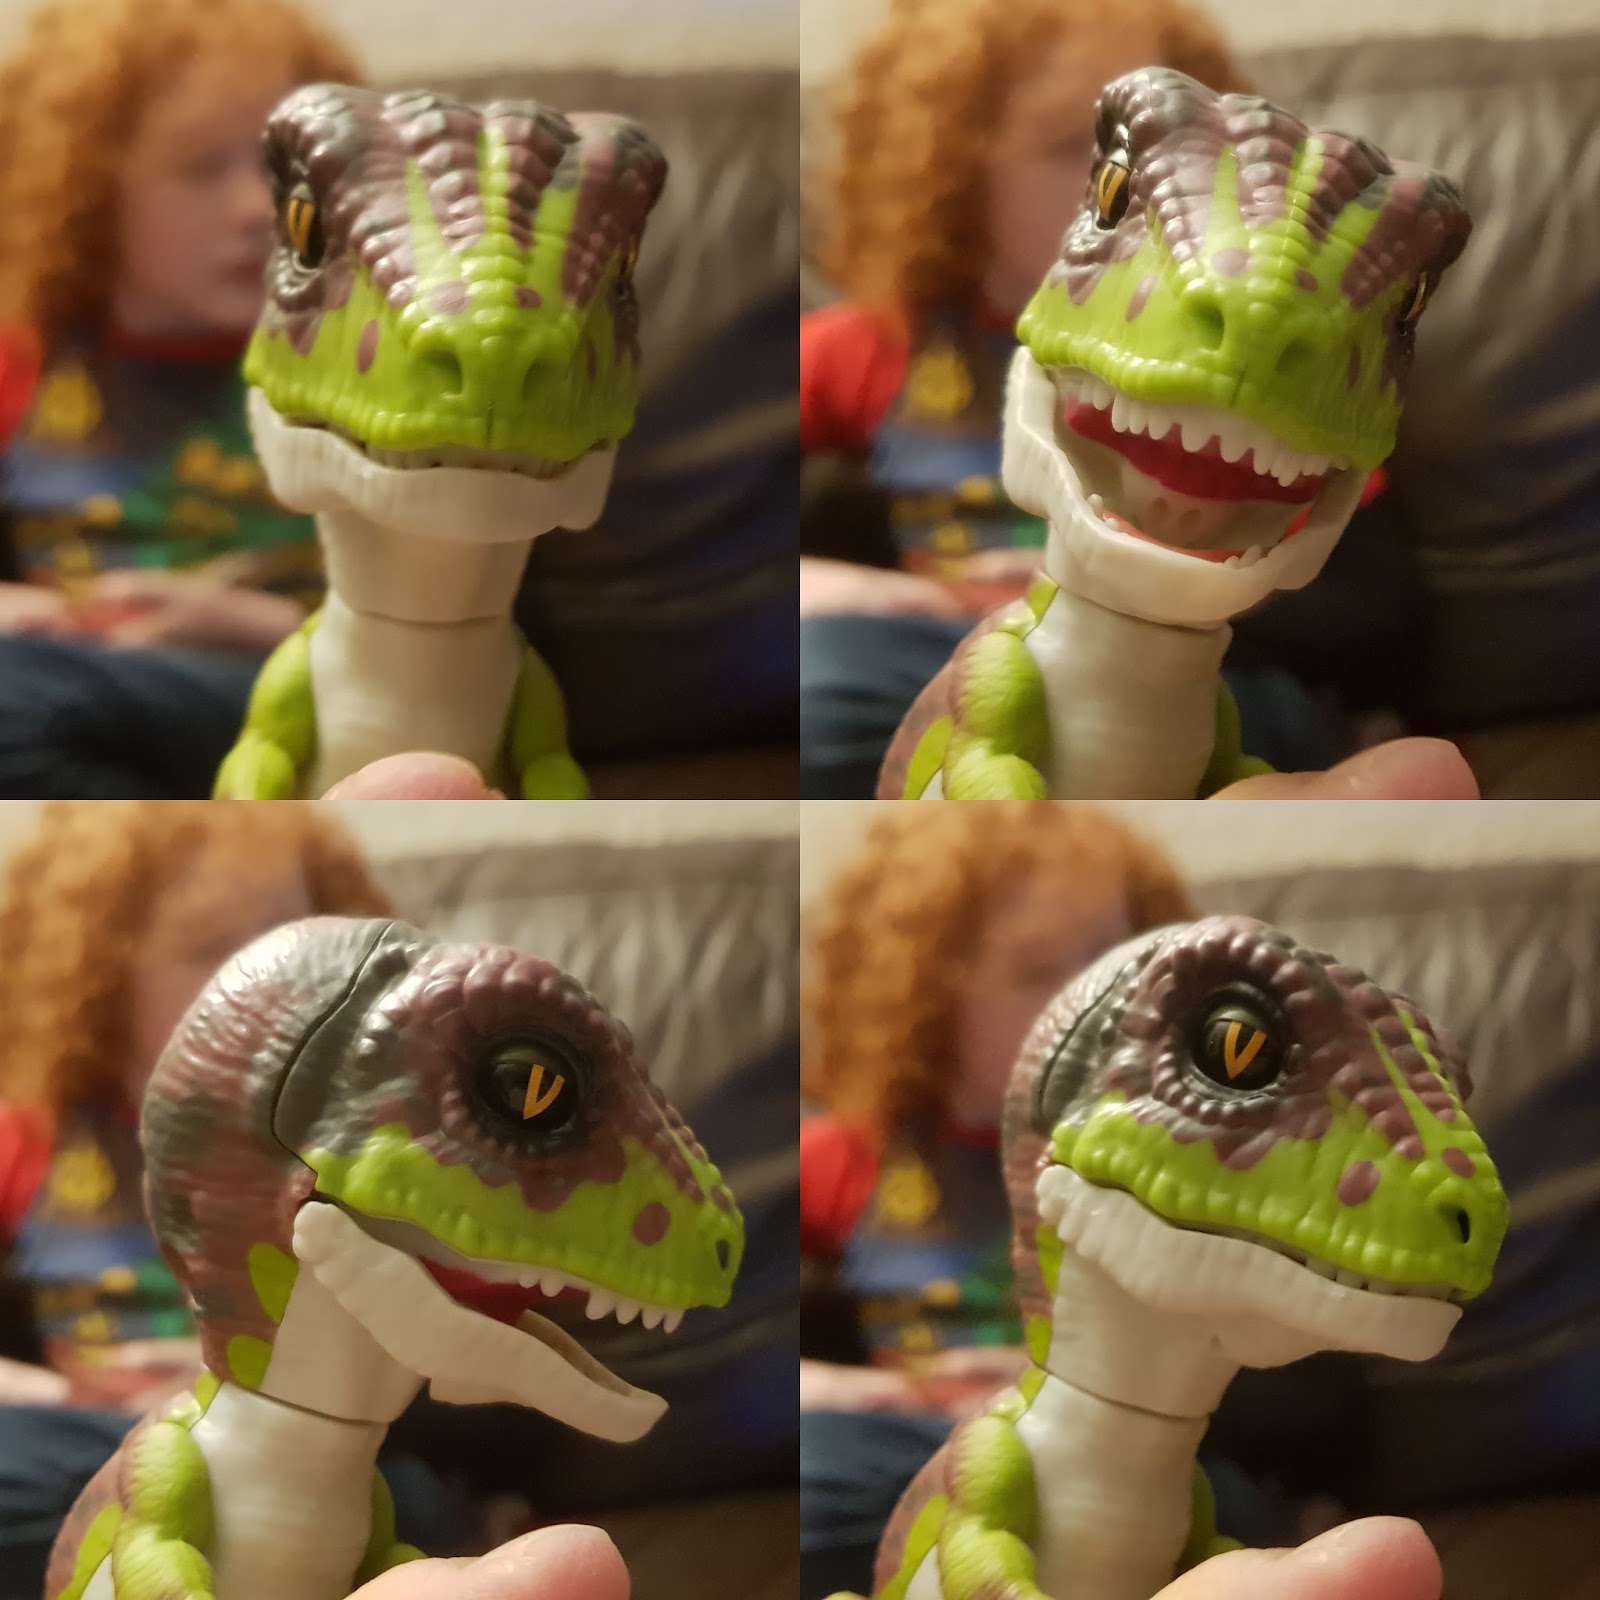 WowWee Untamed Raptor Razor Dinosaur by Fingerlings Ages 5 for sale online 